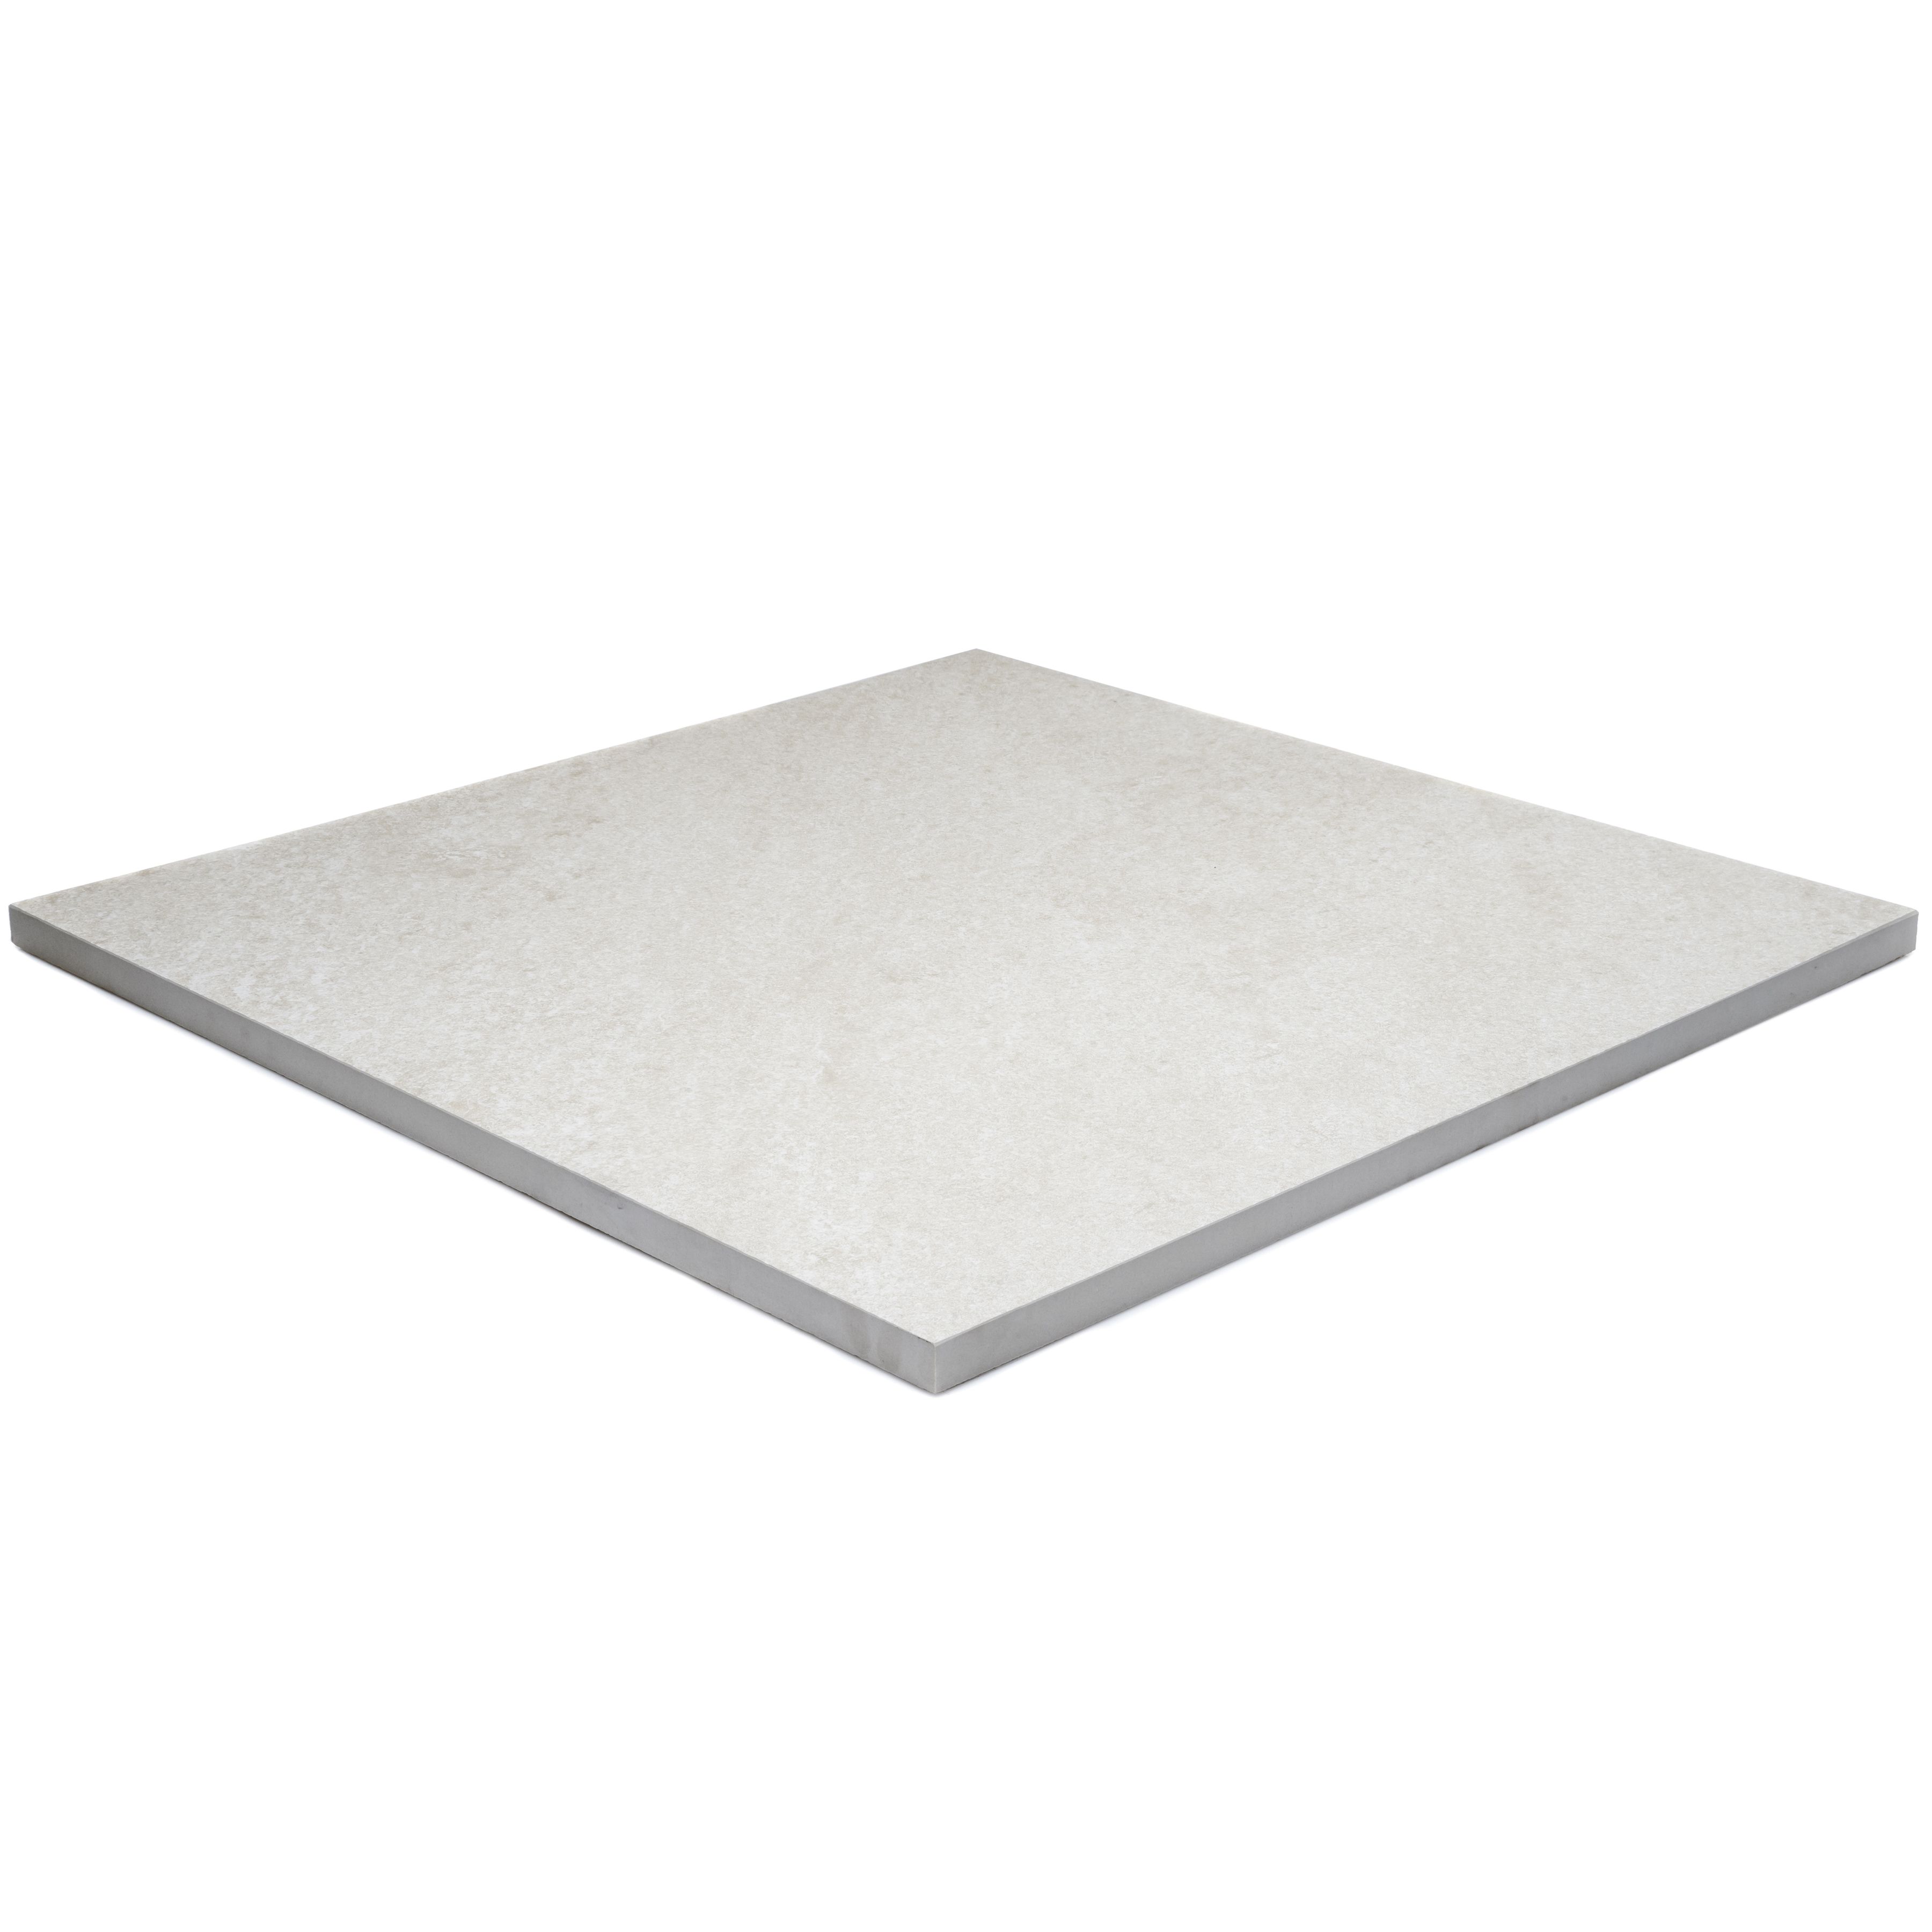 Grove Cream Matt Stone effect Porcelain Outdoor Floor Tile, Pack of 2, (L)600mm (W)600mm